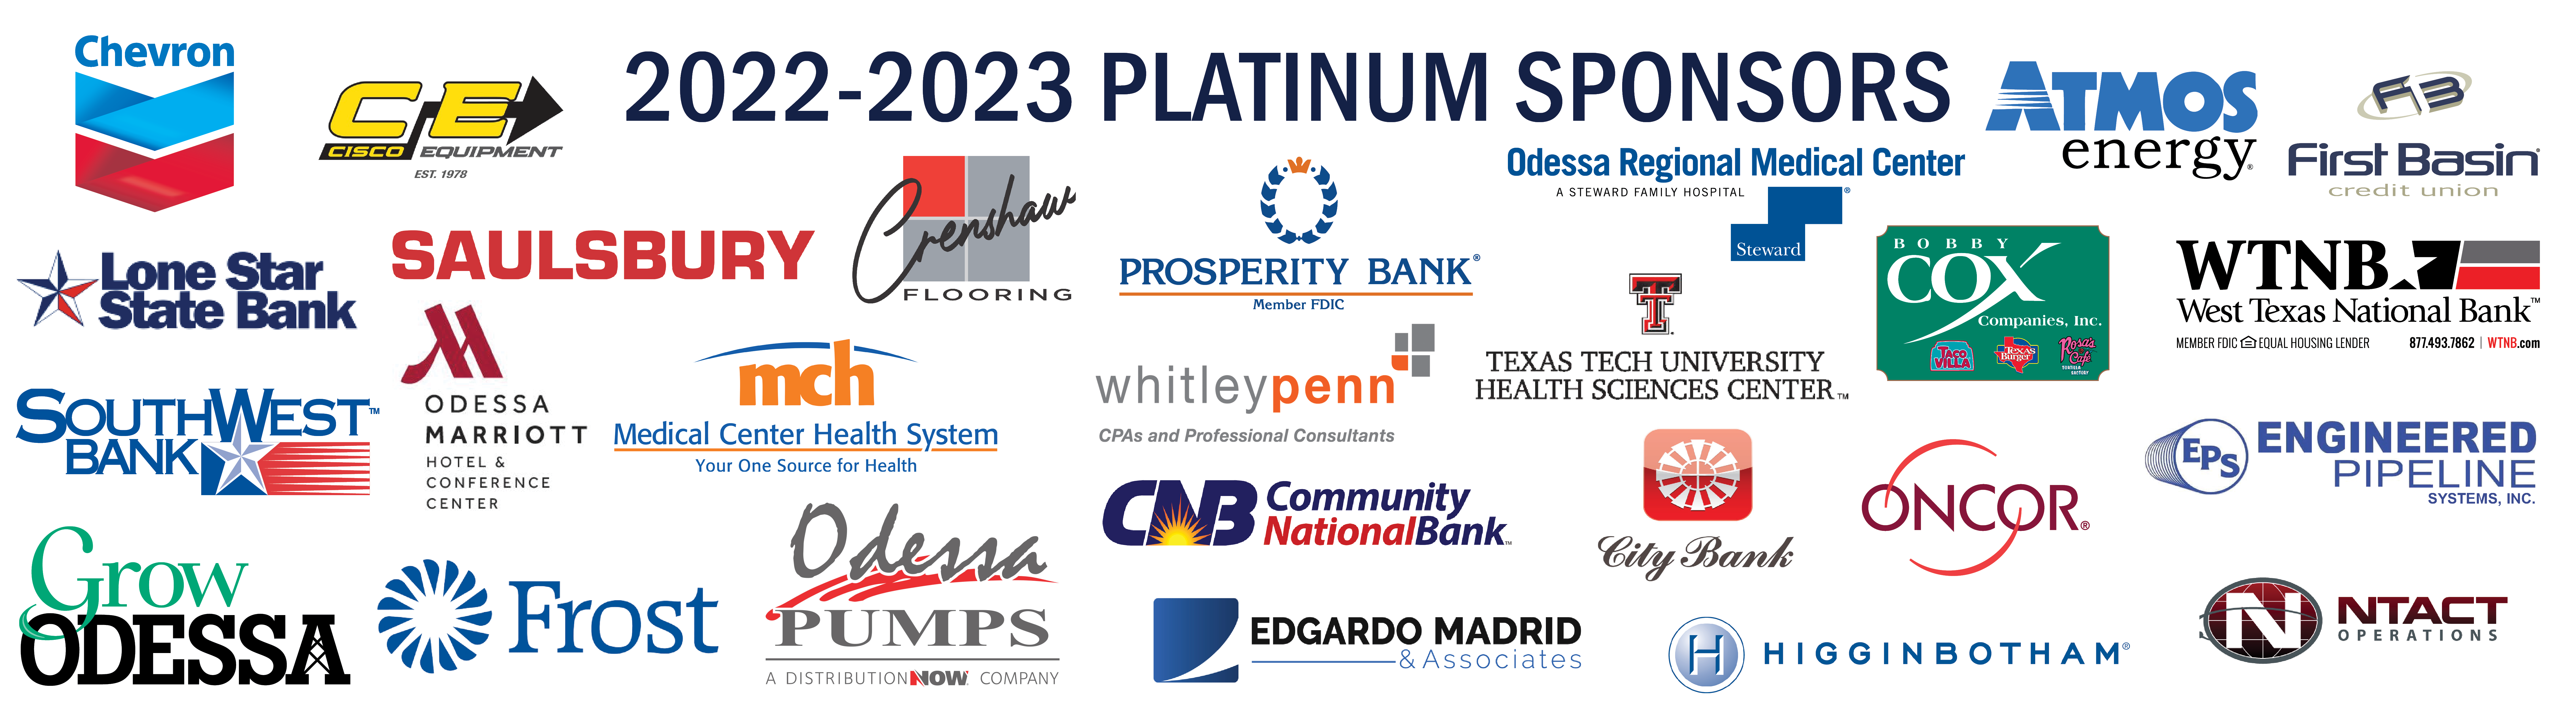 2022-2023 Platinum Sponsors Horizontal